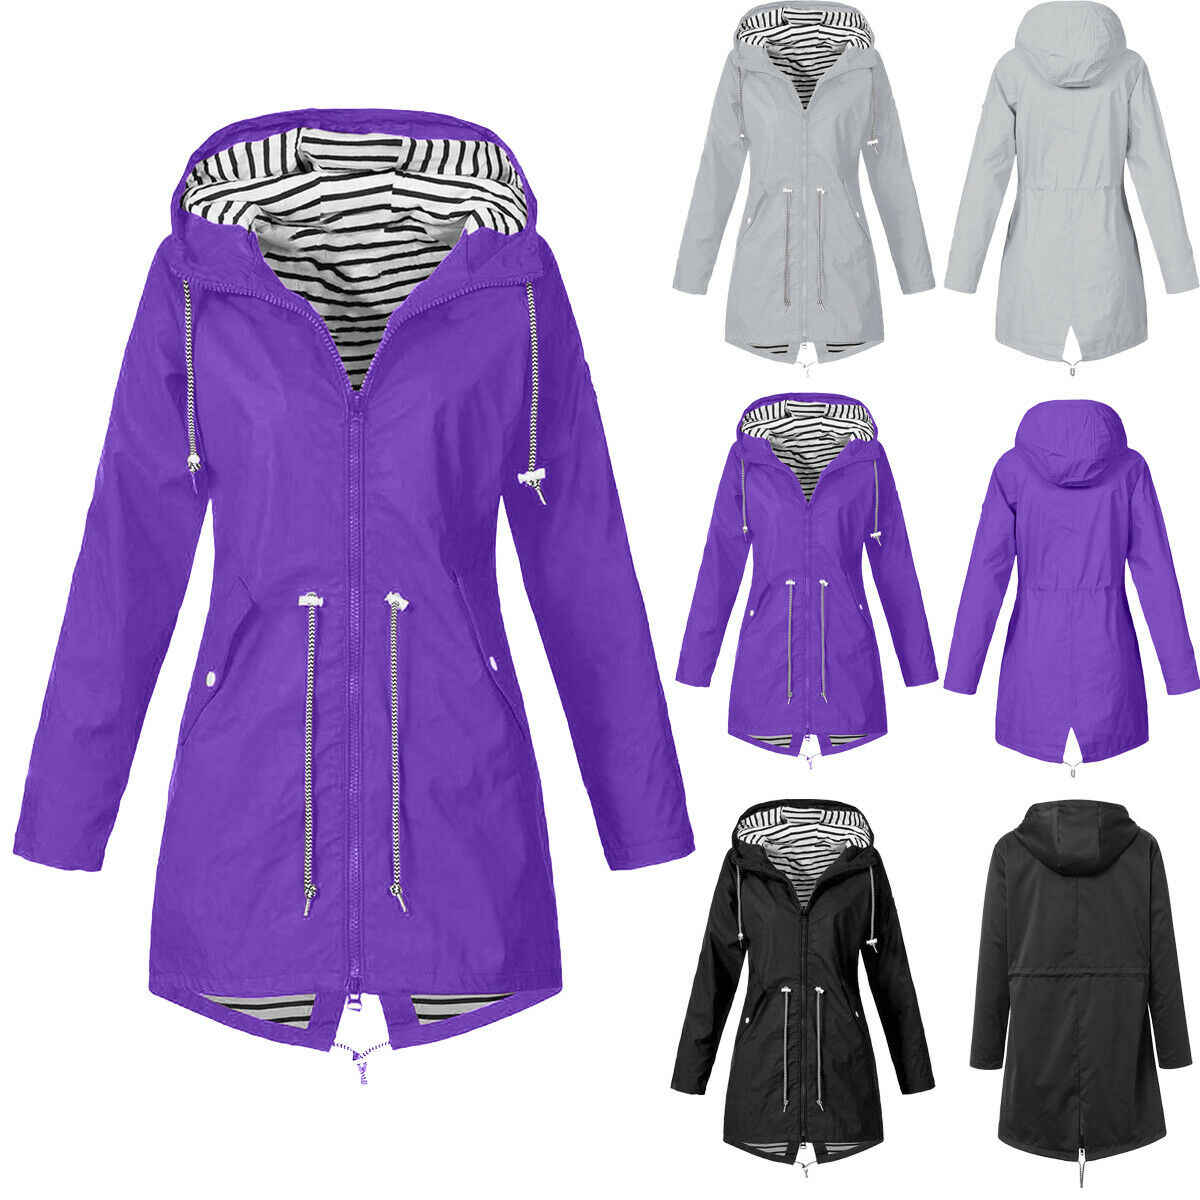 Cathery Women Ladies Raincoat Wind Waterproof Jacket Hooded Rain Mac Outdoor Poncho Coat - image 4 of 5